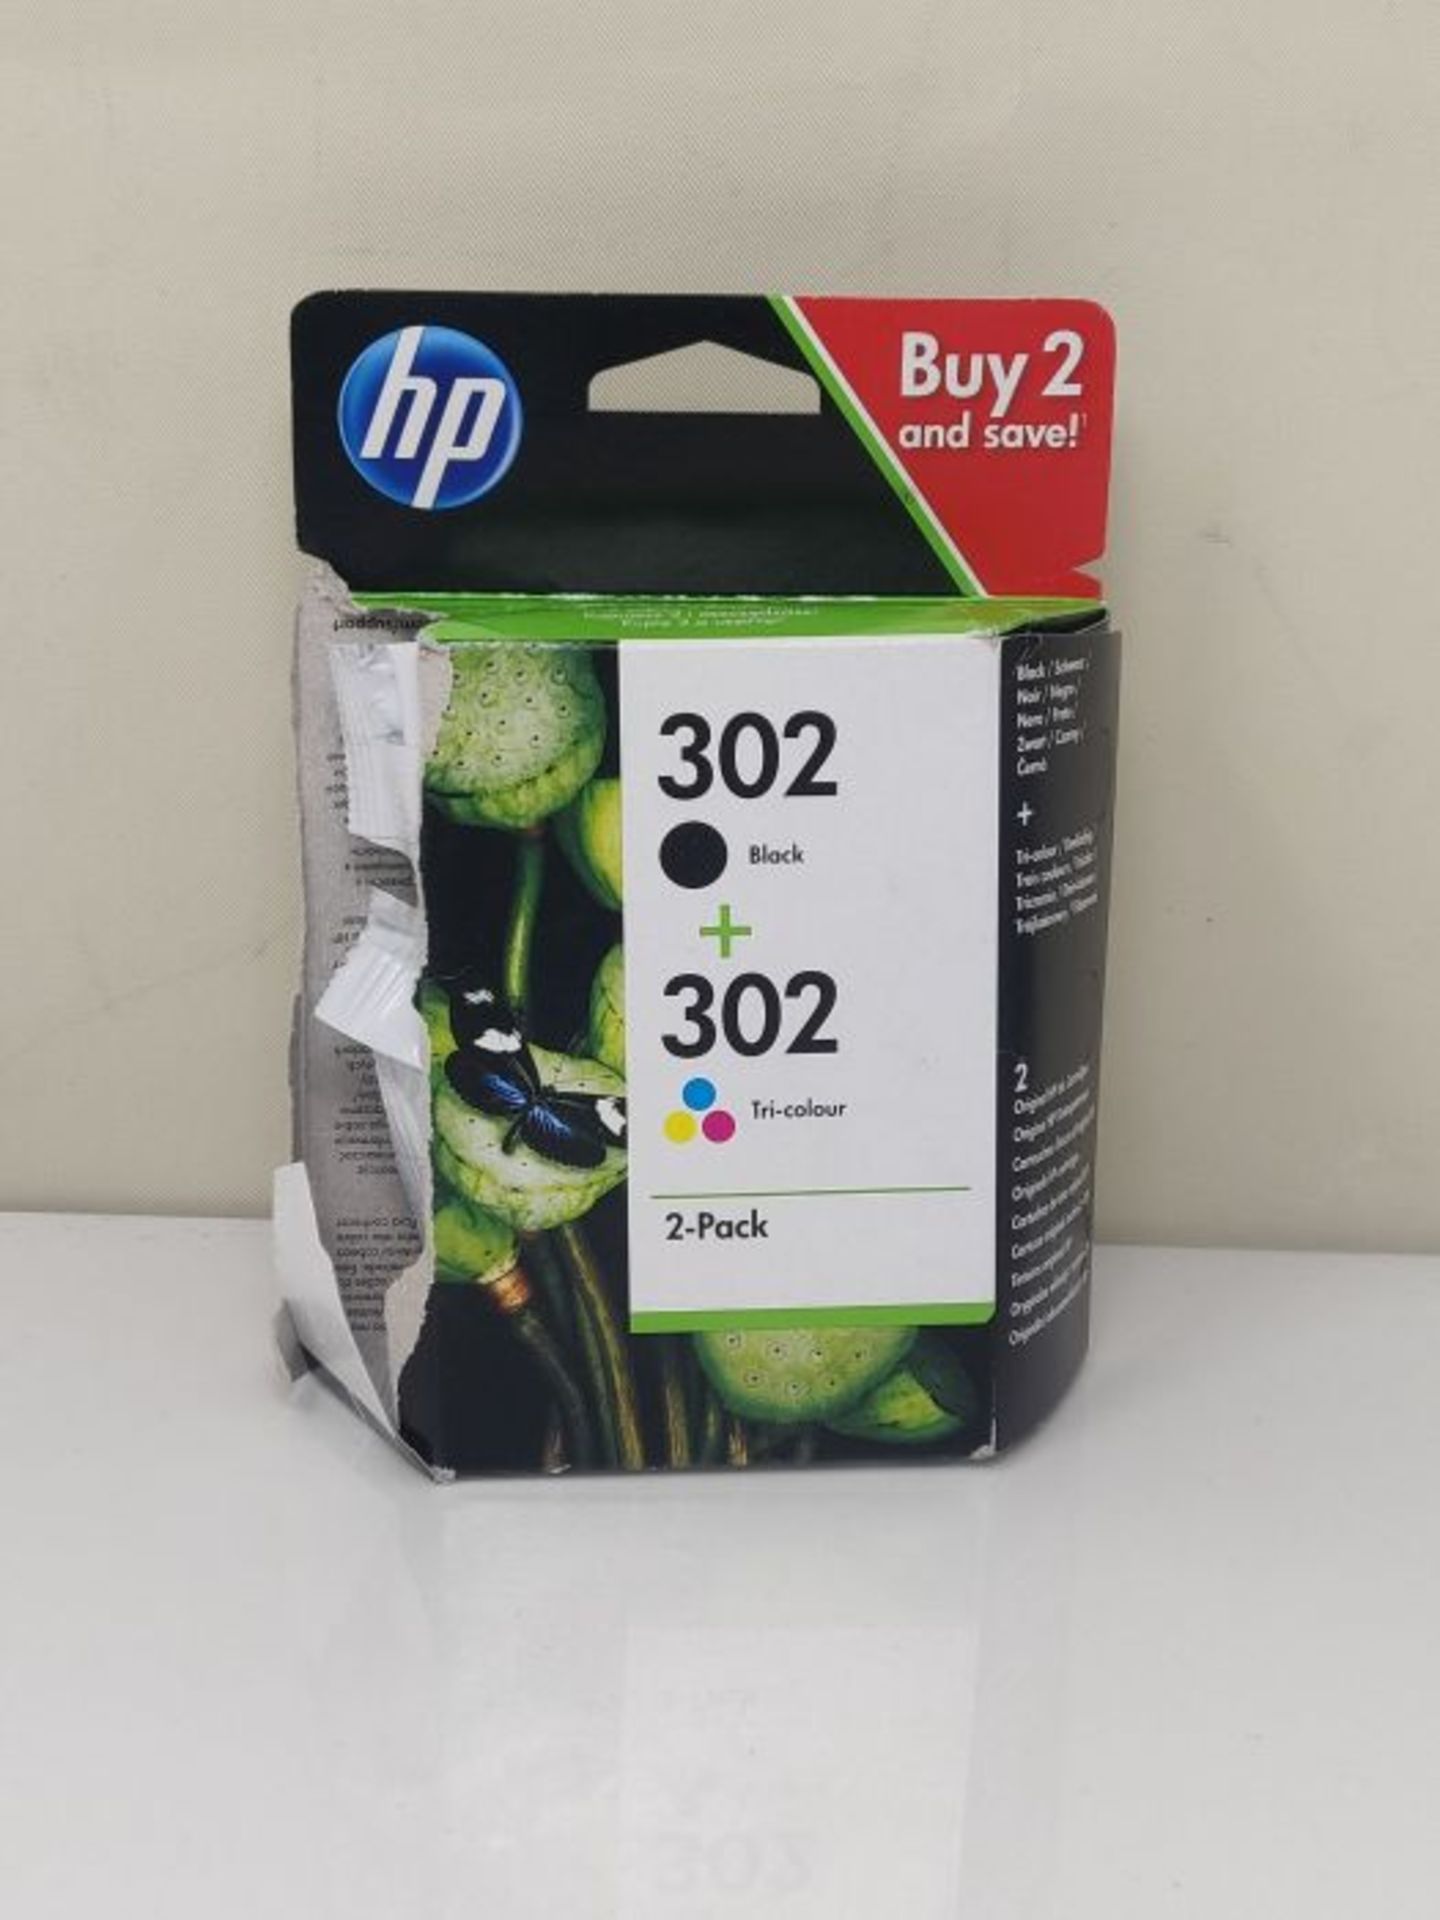 HP X4D37AE 302 Original Ink Cartridges, Black and Tri-colour, Multipack - Image 2 of 3